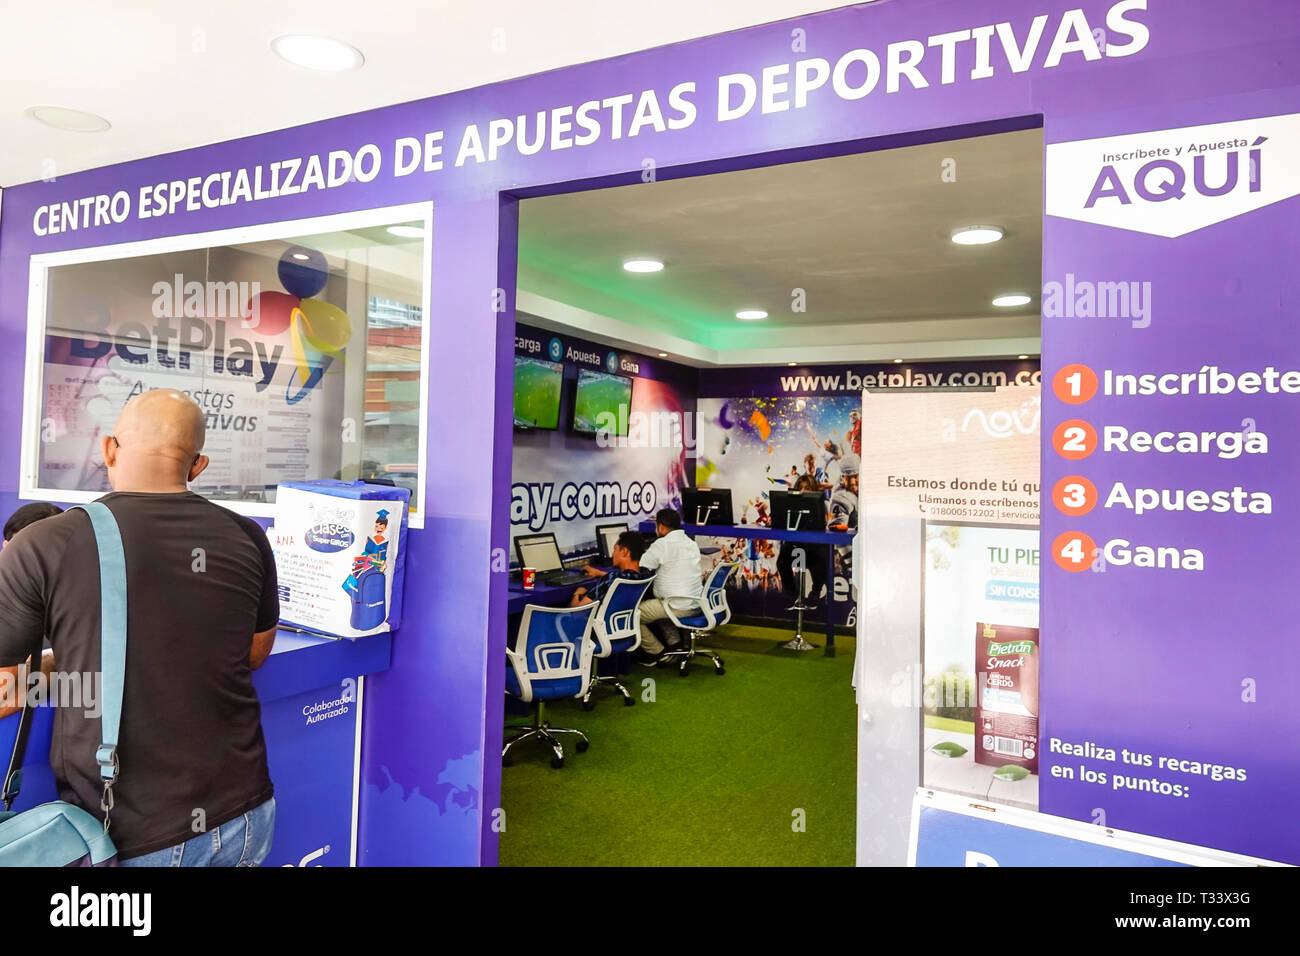 Cartagena Colombia,Bocagrande,BetPlay.com,online sports betting center,gambling,customer,sign,Spanish language,COL190121117 Stock Photo